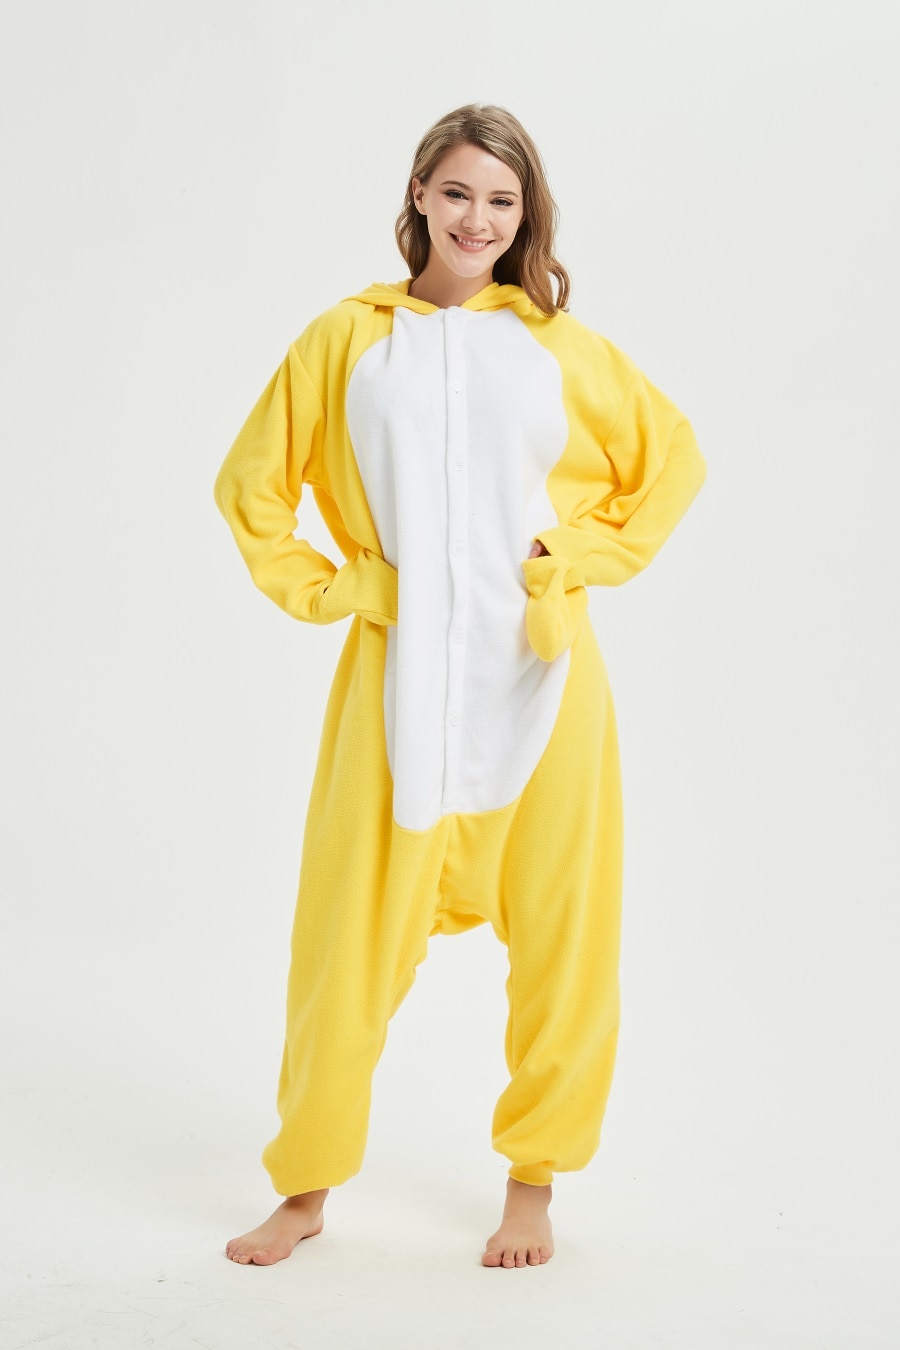 Unisex Duck Kigurumis Women Onesies Adult Winter Pajama Funny Jumpsuit Polar Fleece Animal Cartoon Overalls Halloween Suit